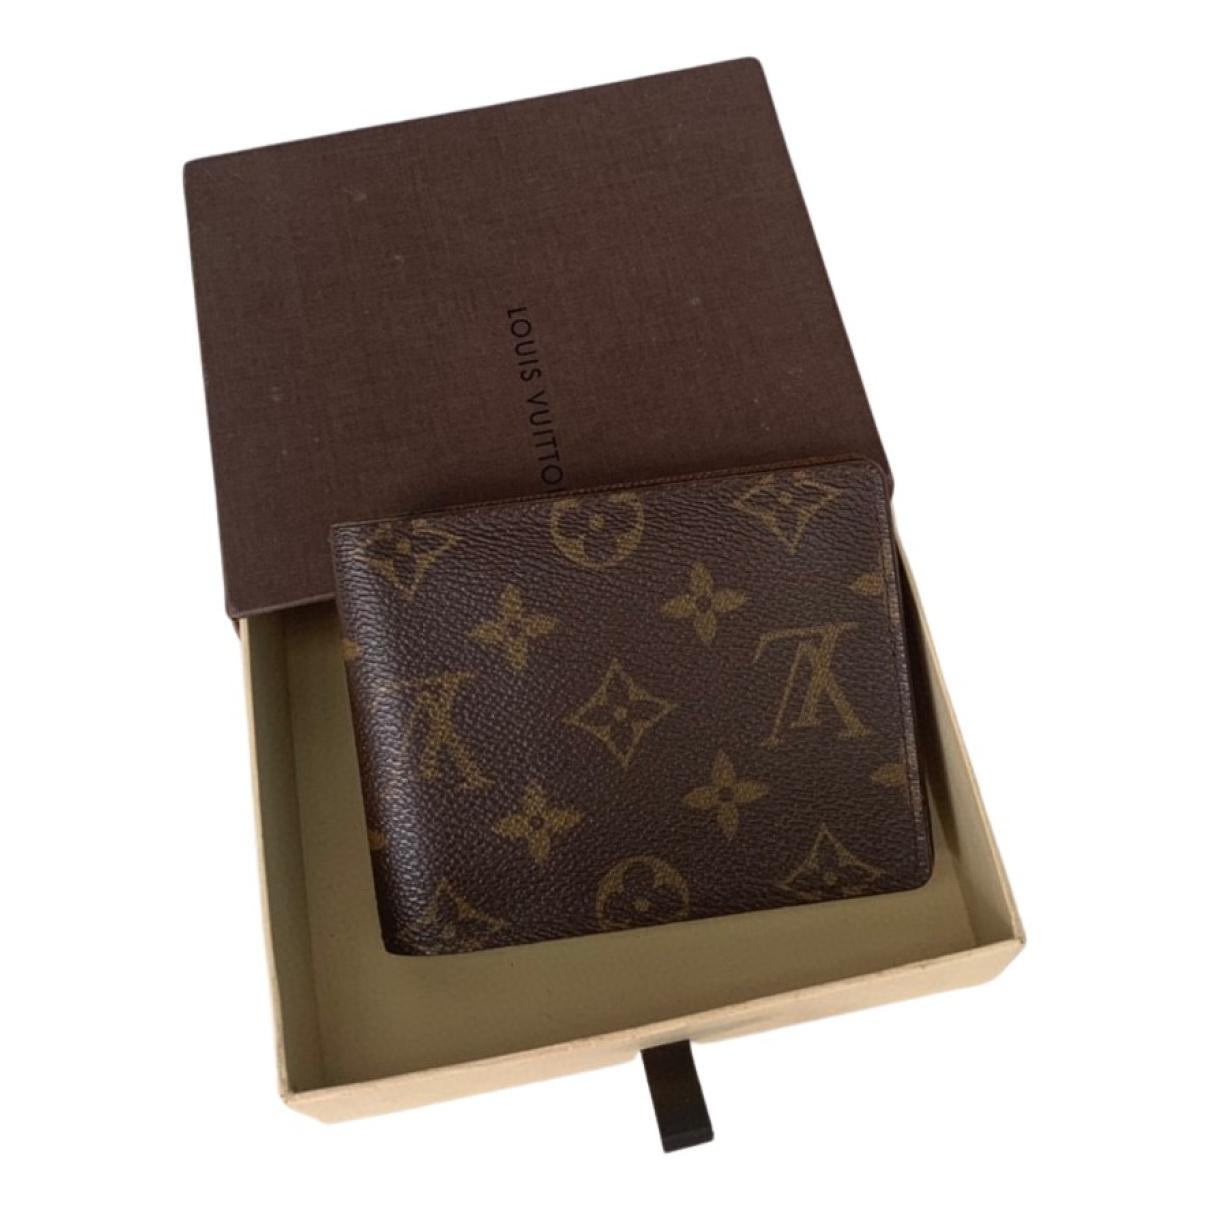 Sold at Auction: Louis Vuitton, LOUIS VUITTON Monogrammed Passport Holder,  FR